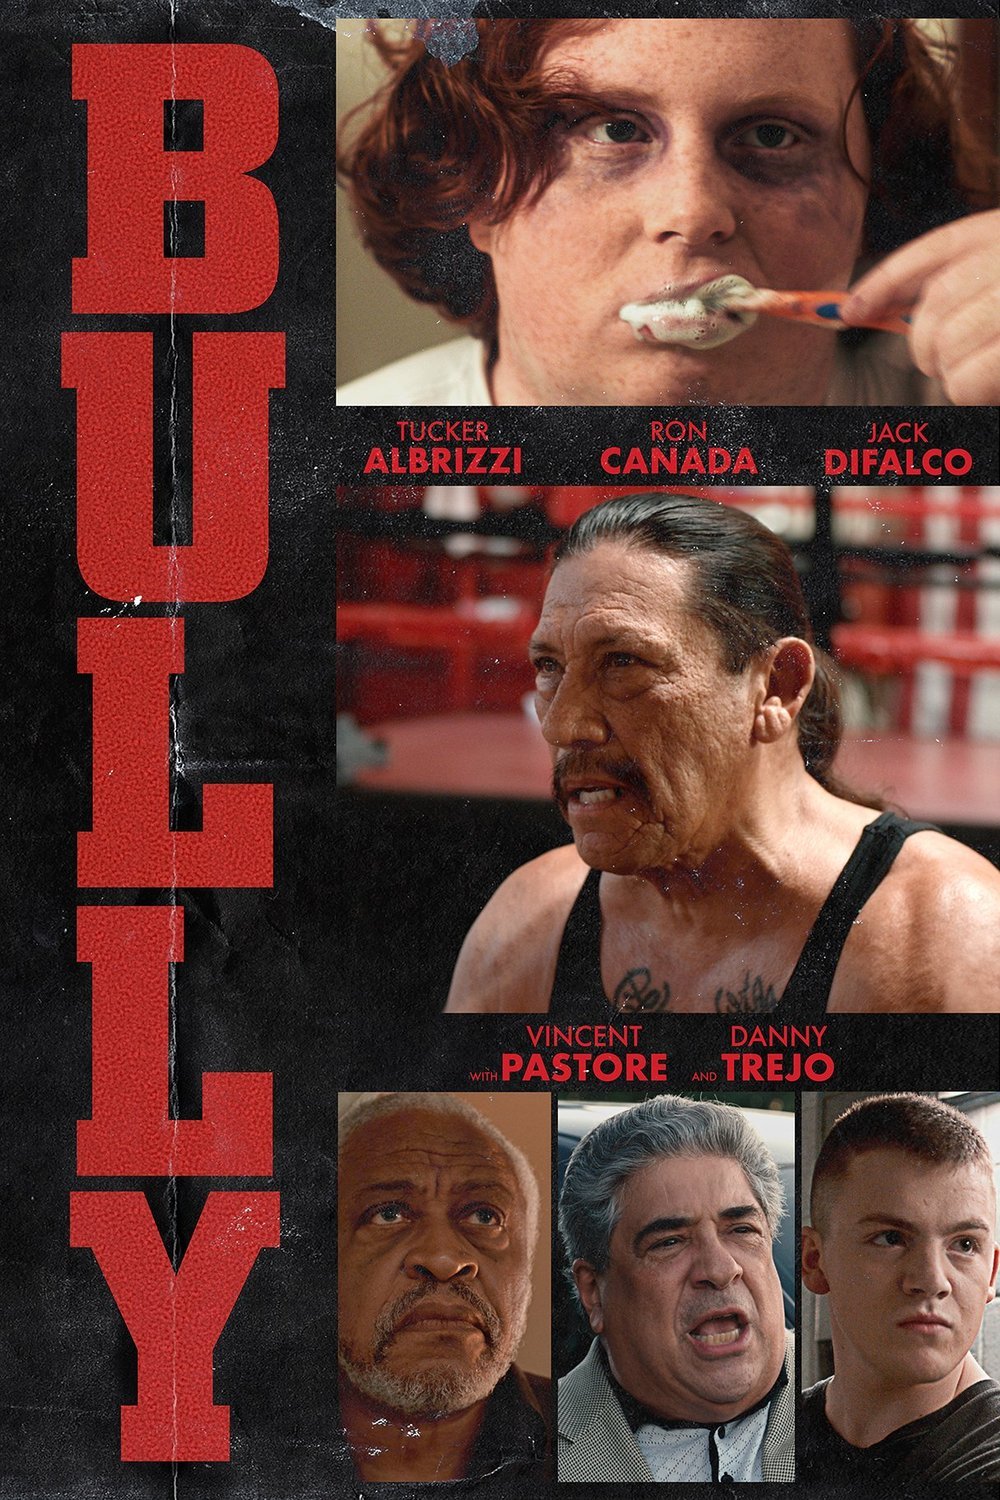 L'affiche du film Bully